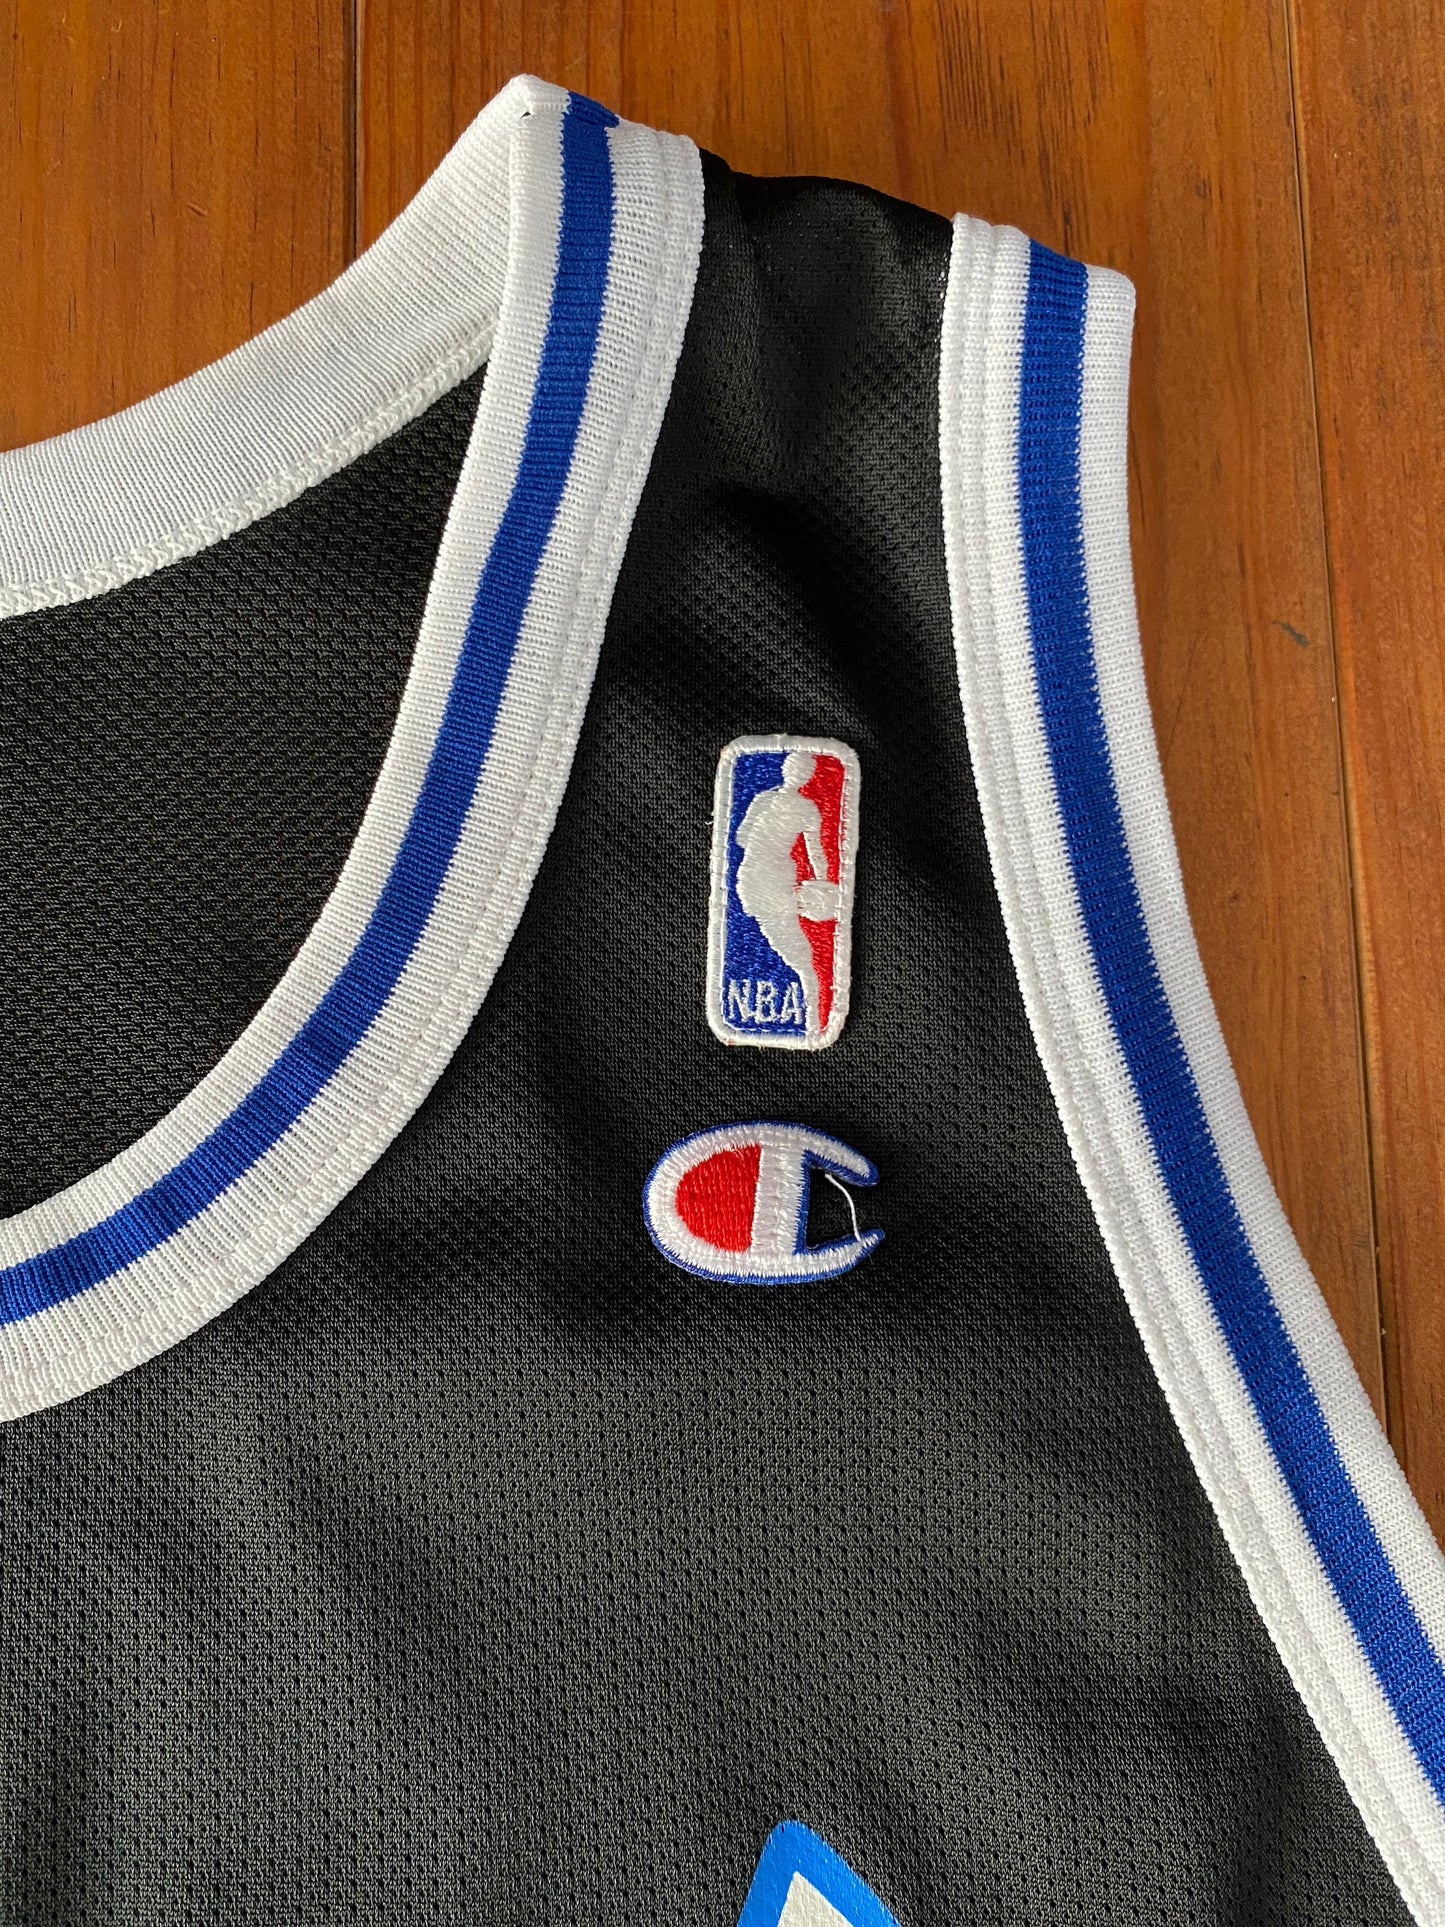 Size 48 VTG 90s Orlando Champion NBA jersey, Player Hardaway #01